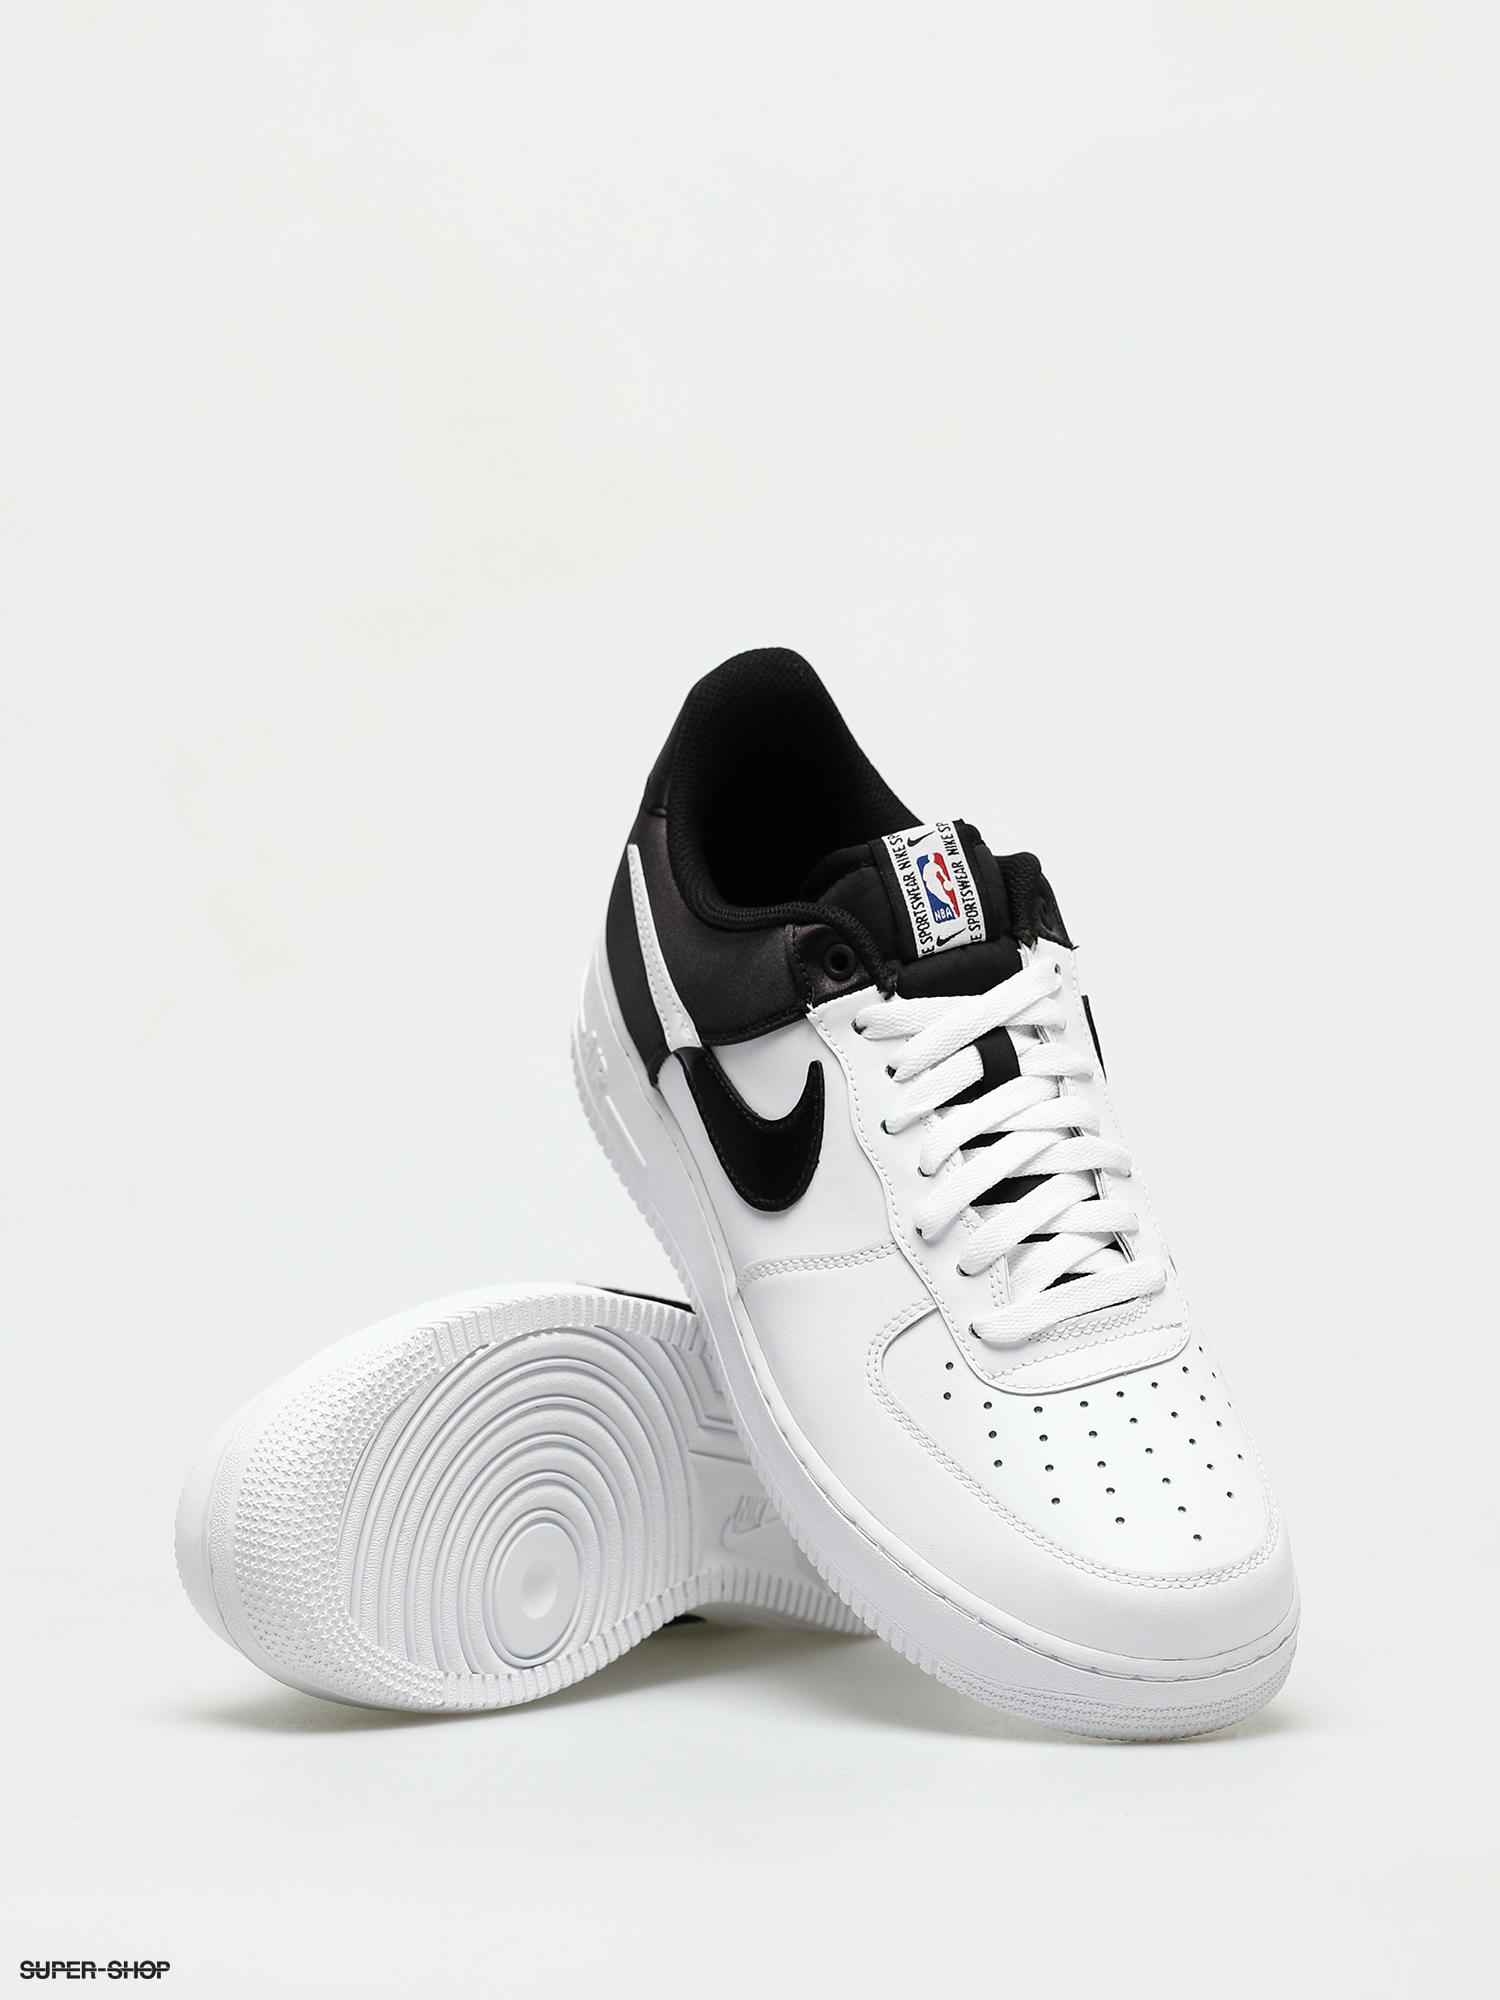 Men's Nike Air Force 1 '07 LV8 J22 White Black Washed